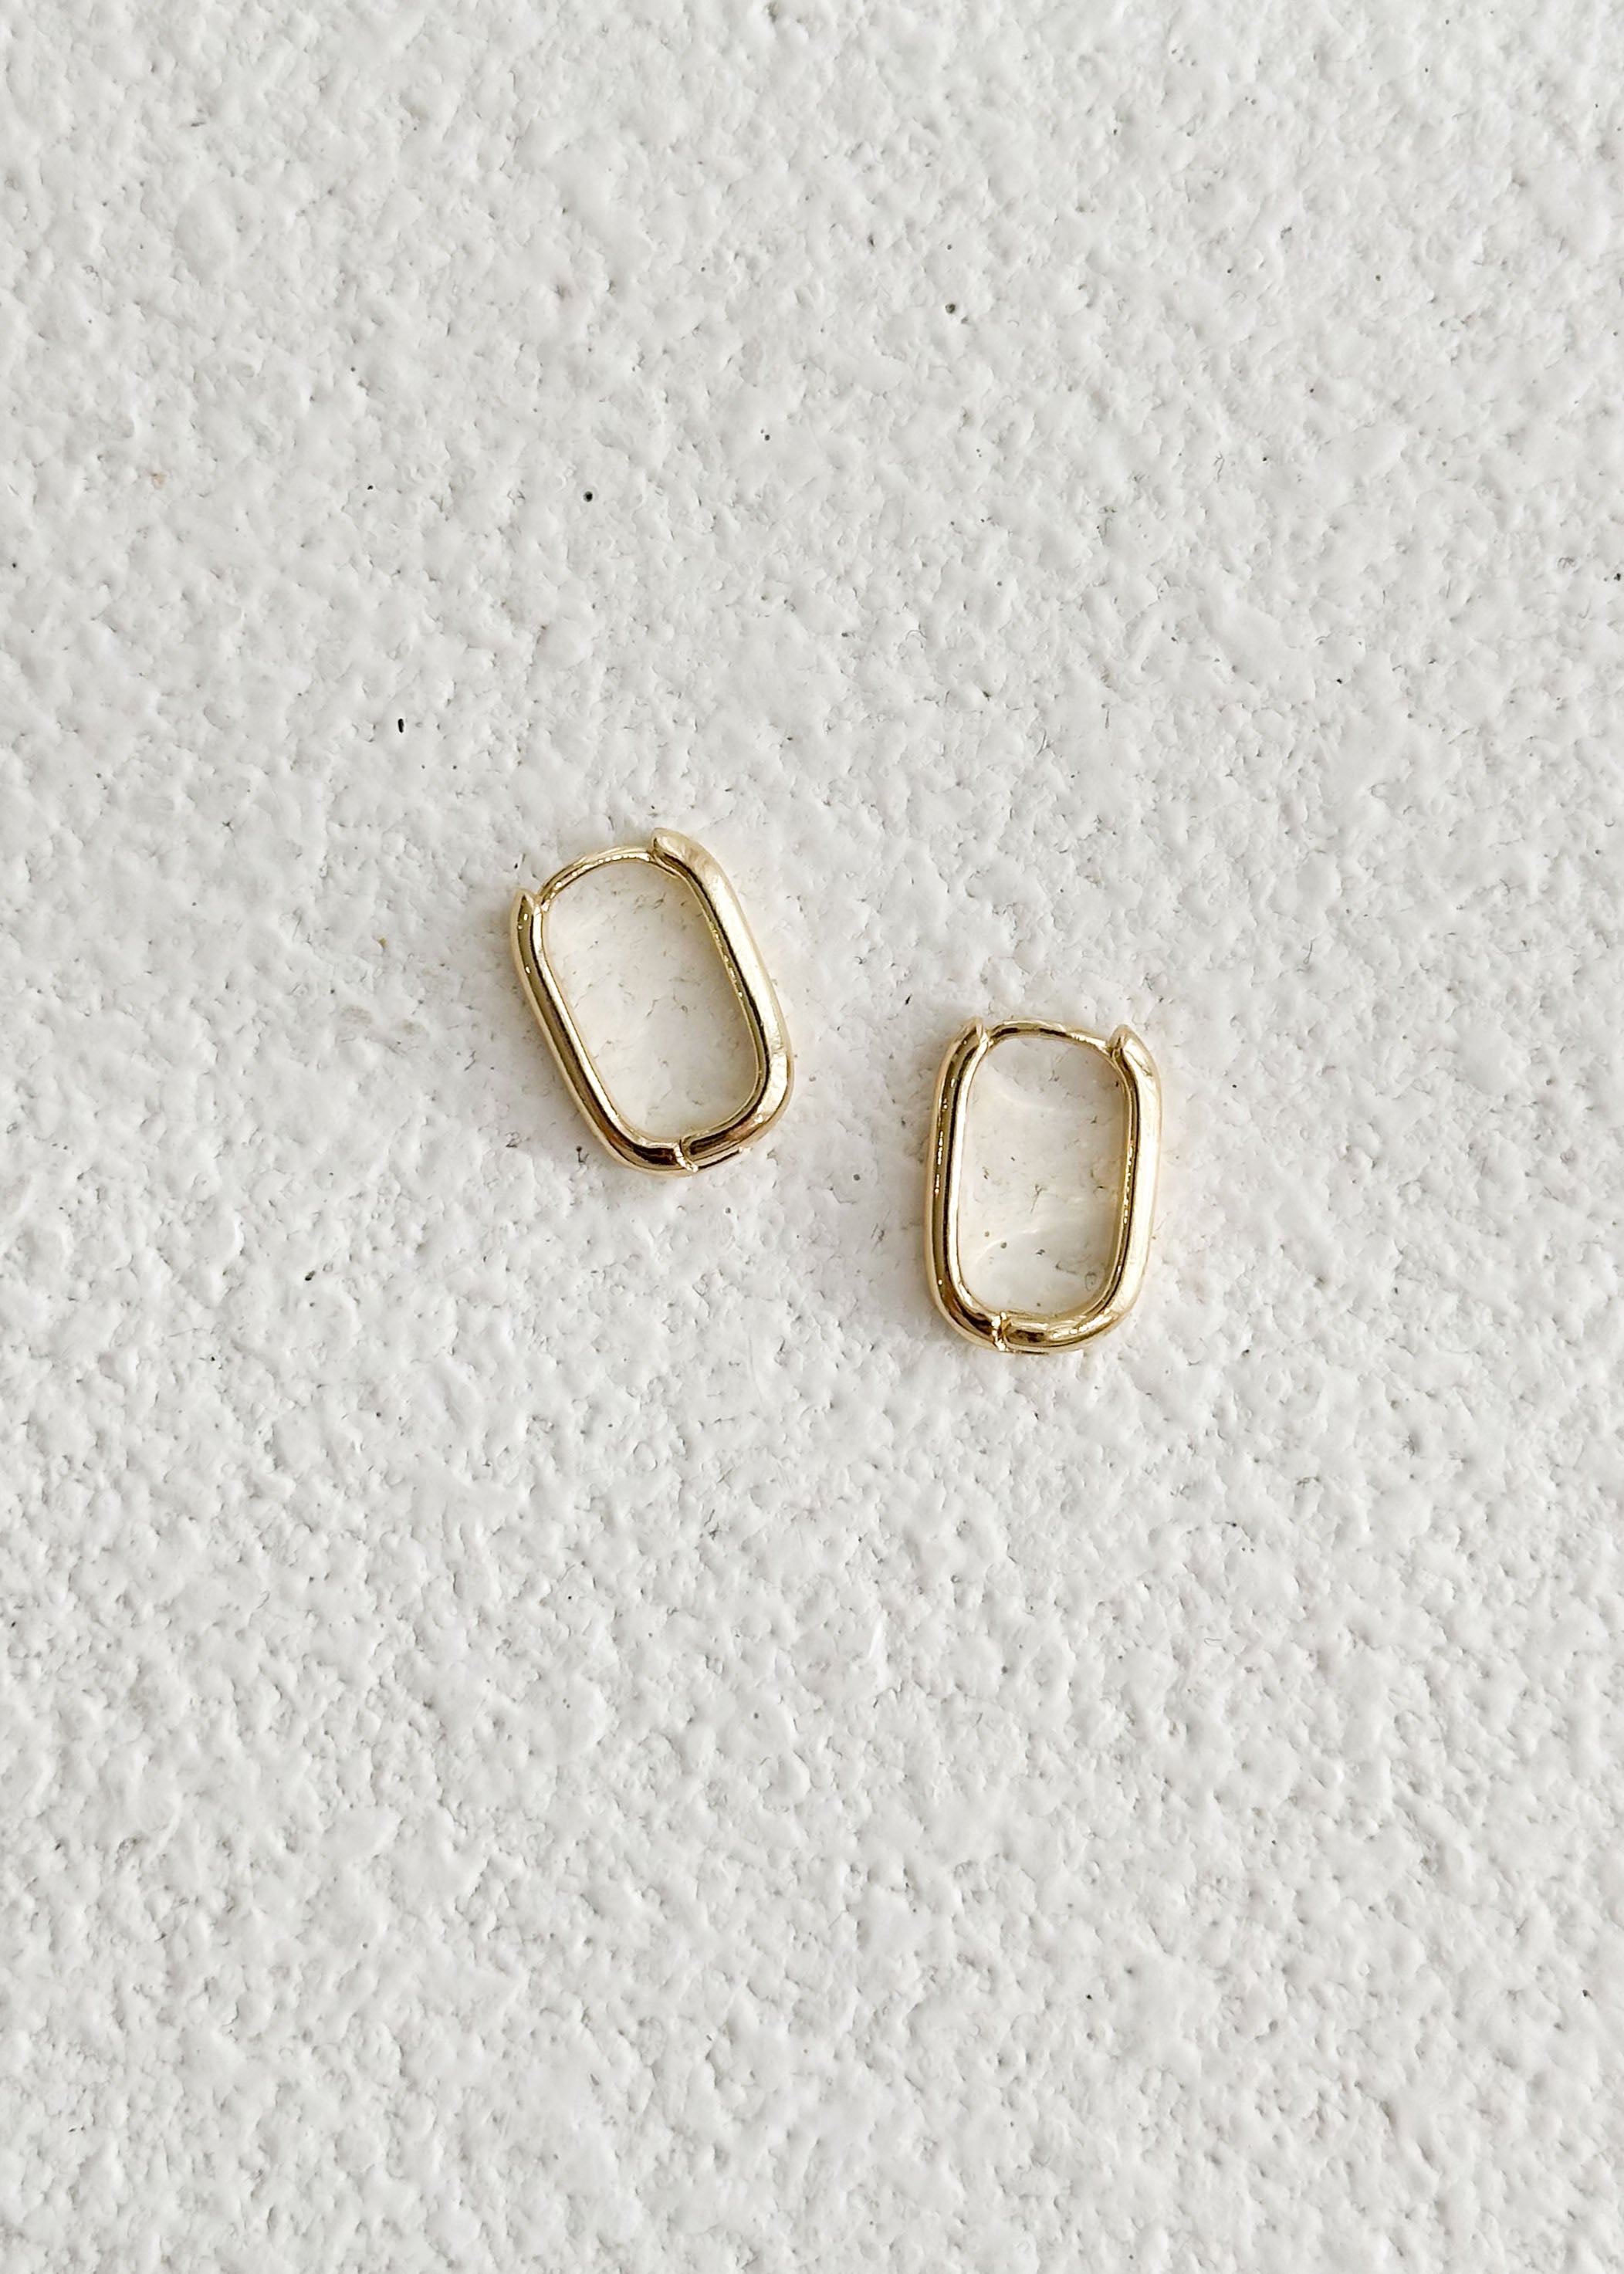 Perkin Earrings - Gold